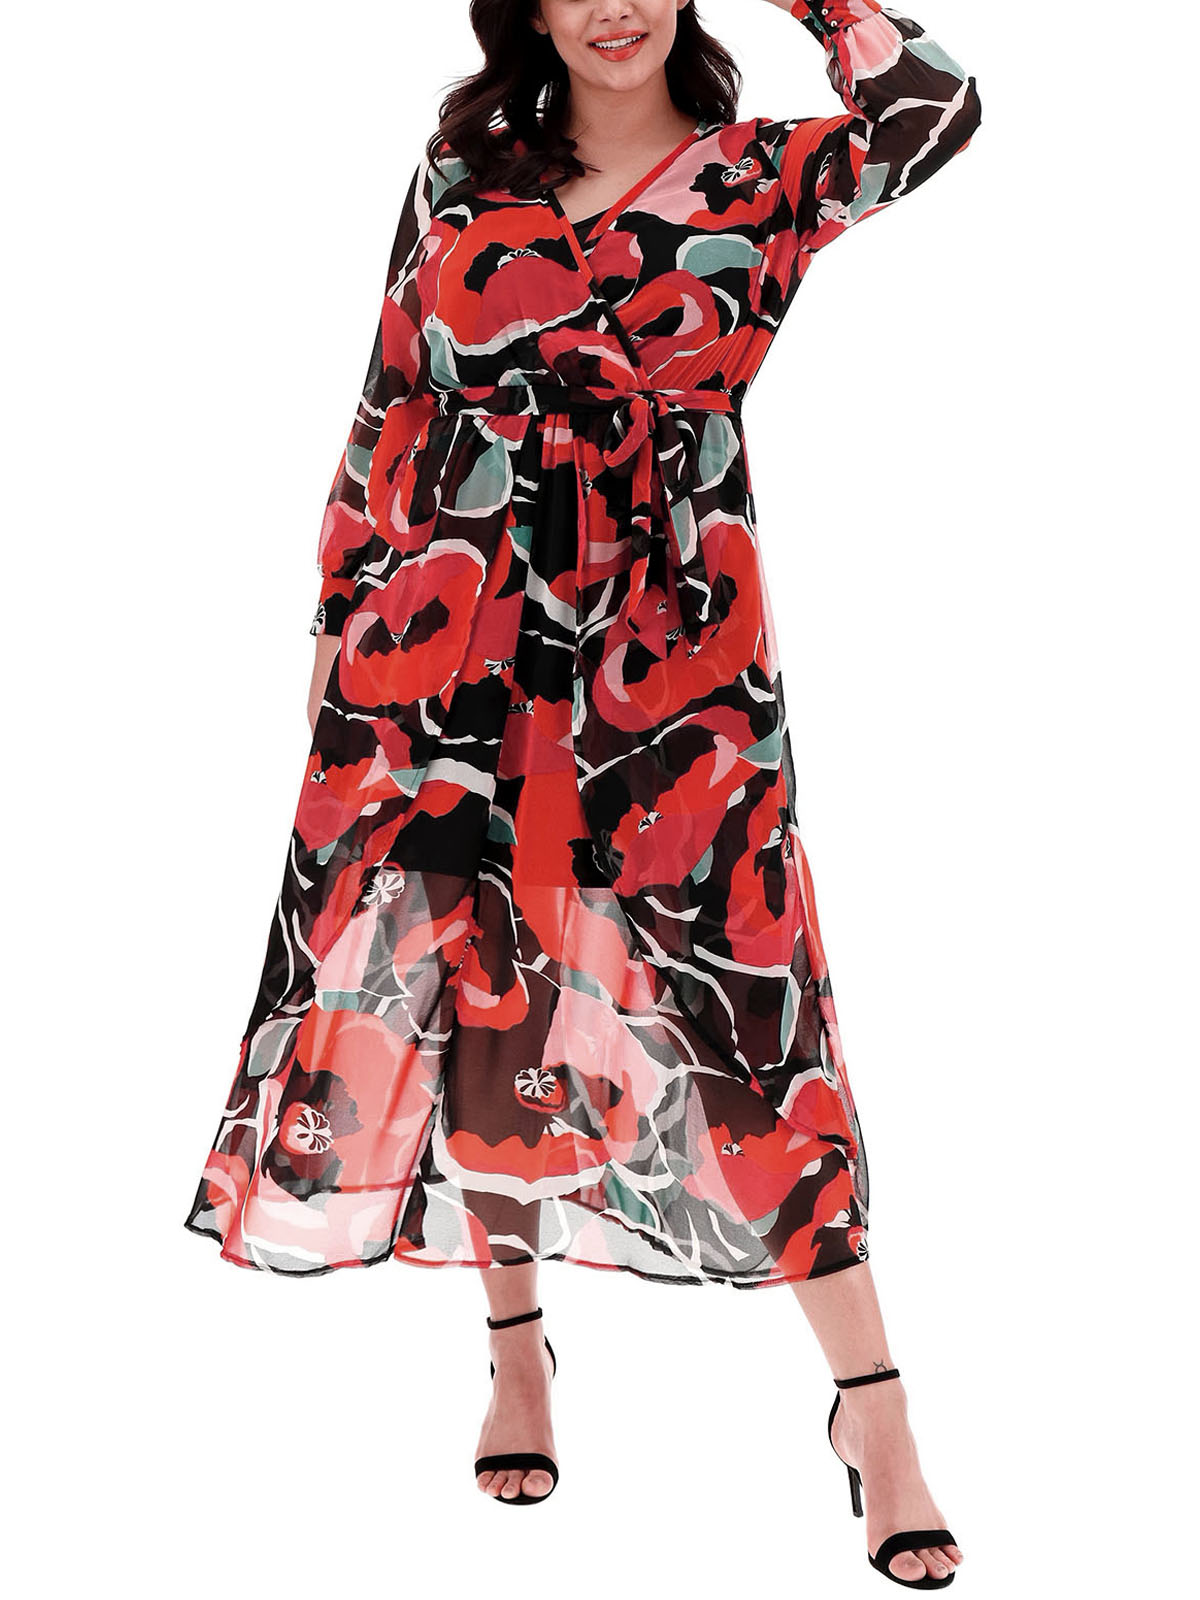 Joanna Hope - - Joanna Hope RED Printed Maxi Dress - Size 12